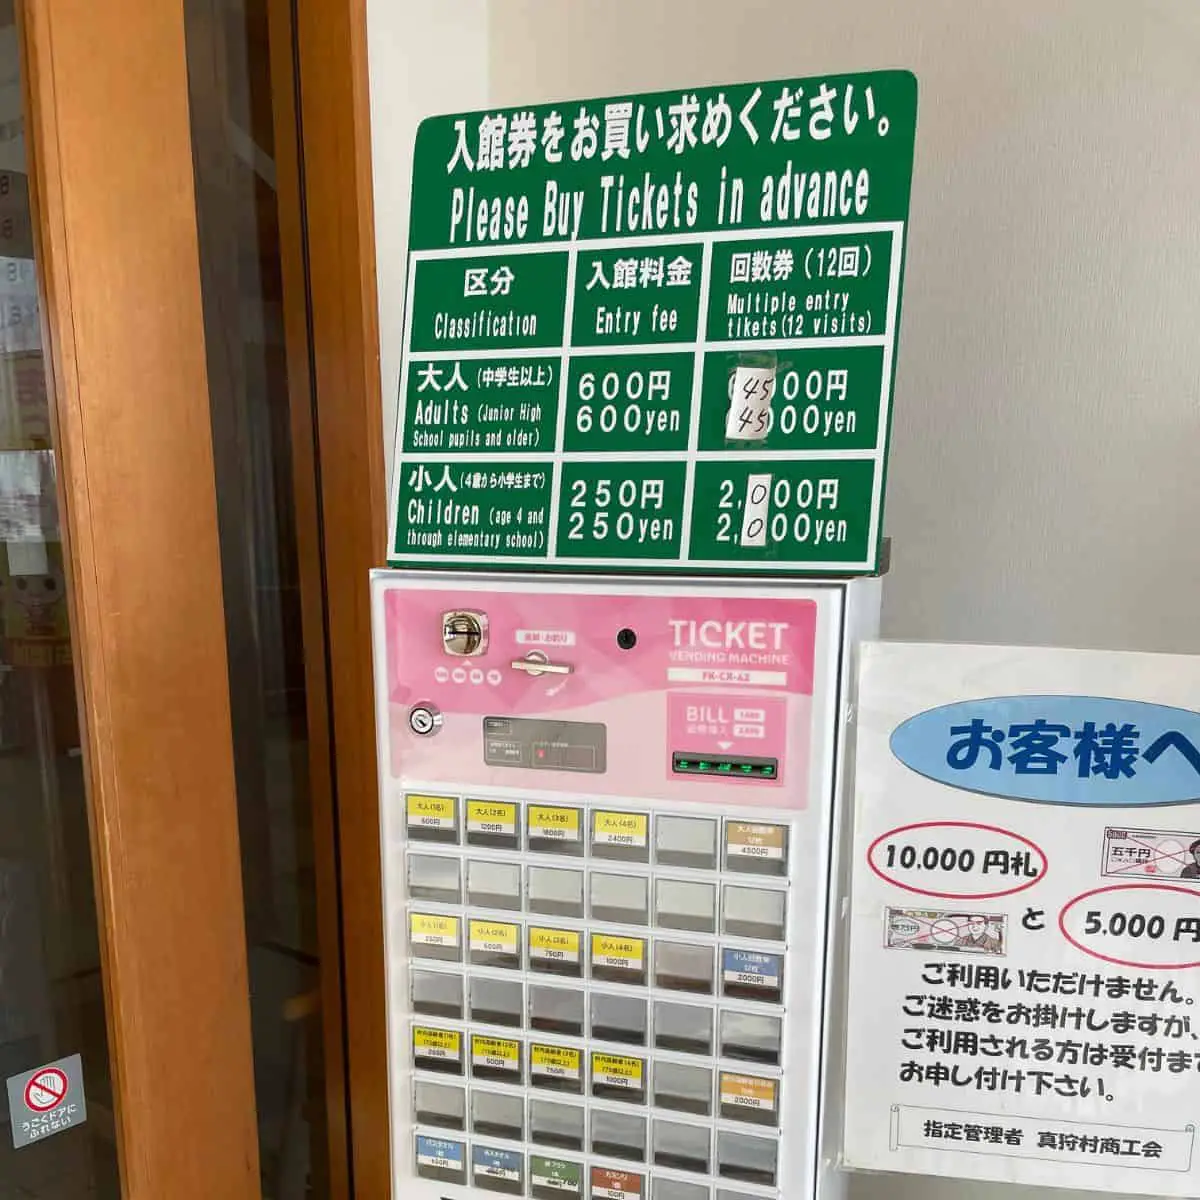 Ticket kiosks onsen centres